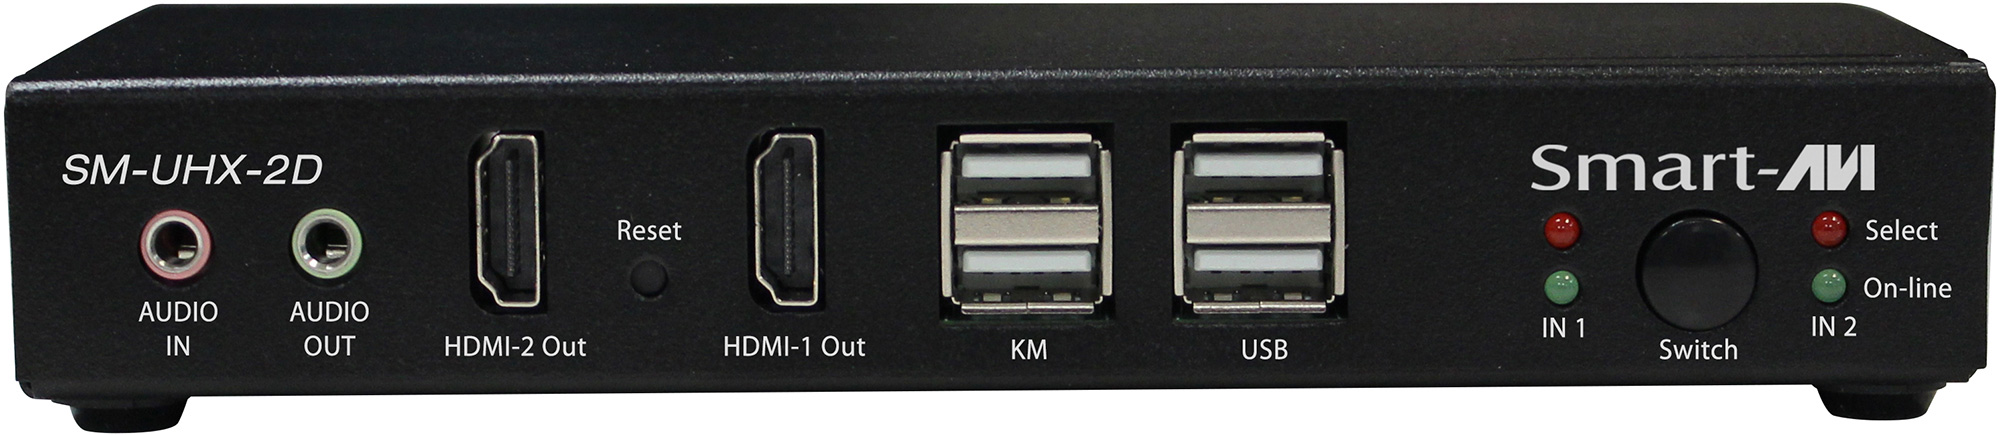 Smart AVI SM-UHX-2D Dual Head HDMI and DisplayPort KVM Switch with Audio and USB 2.0 Support - 2 Port SAVI-SM-UHX-2D